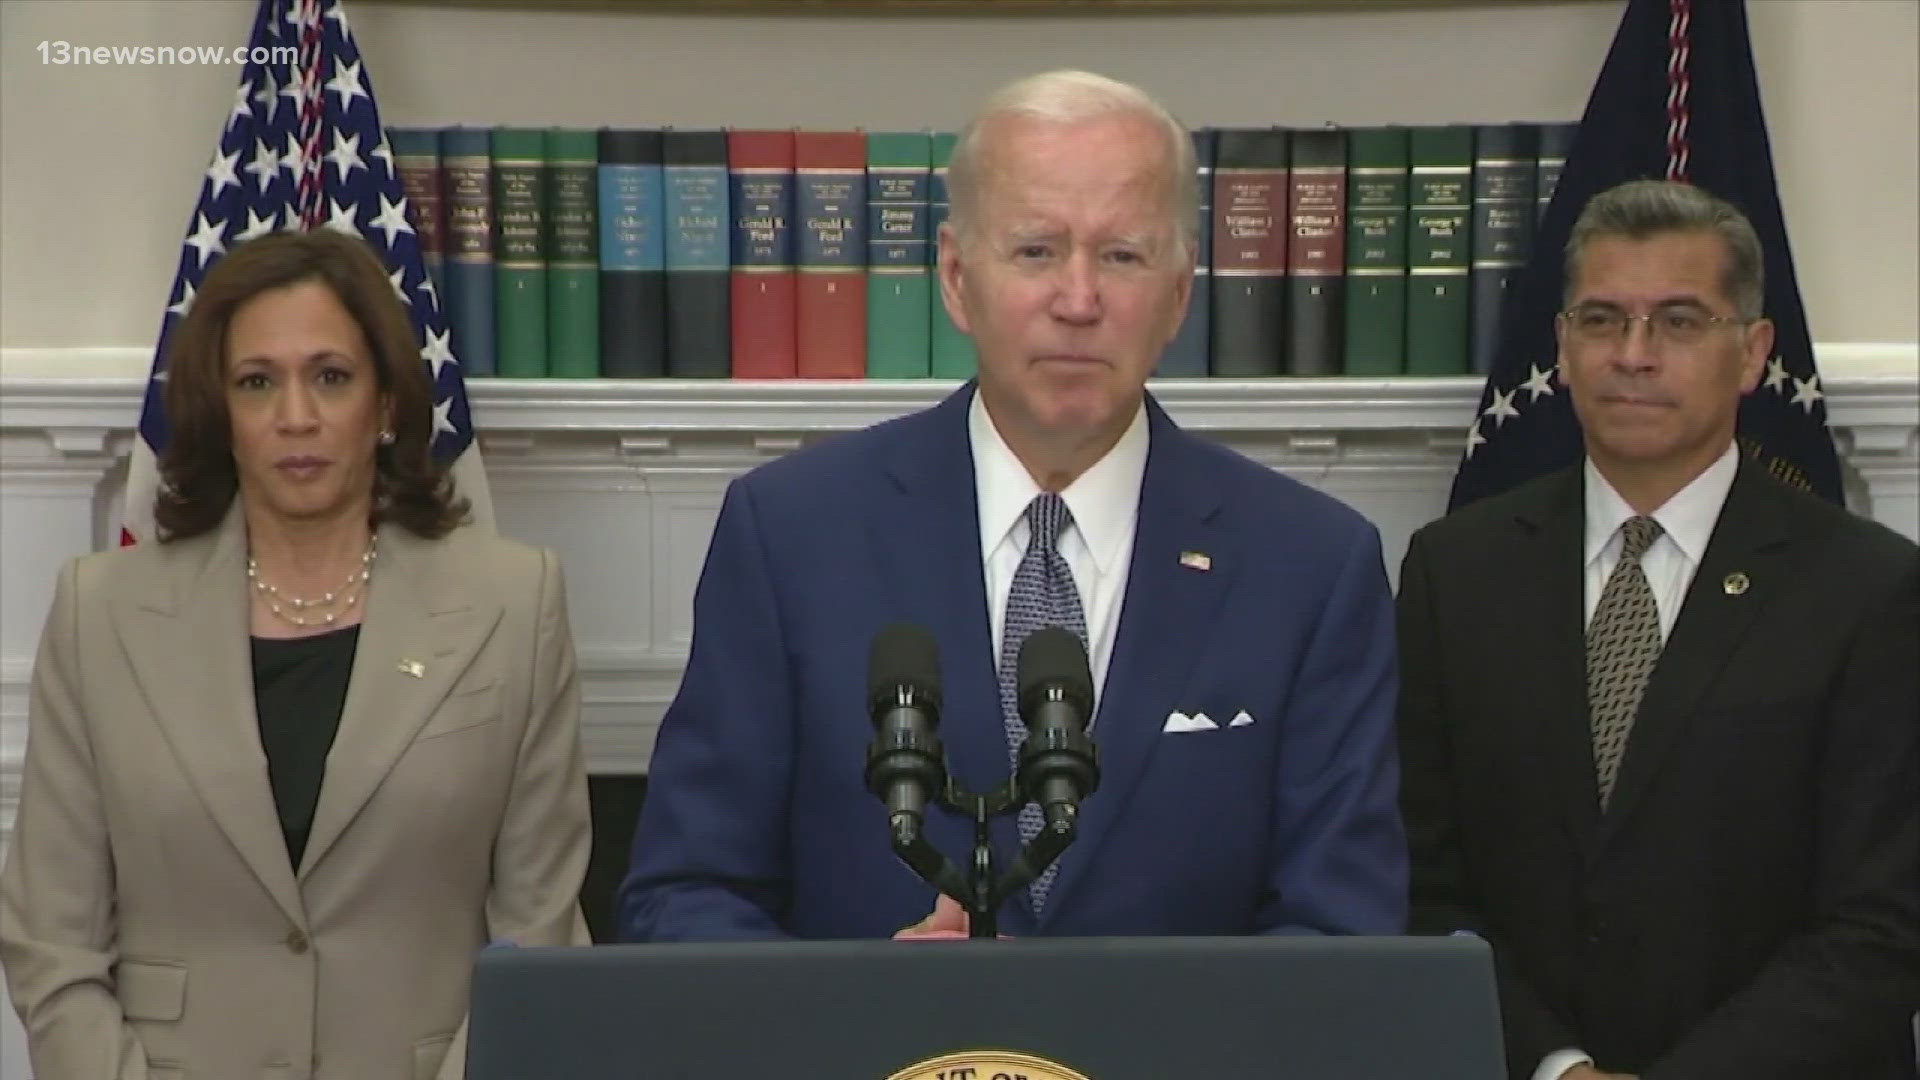 President Joe Biden and Vice President Kamala Harris took their campaign to Virginia on Tuesday.